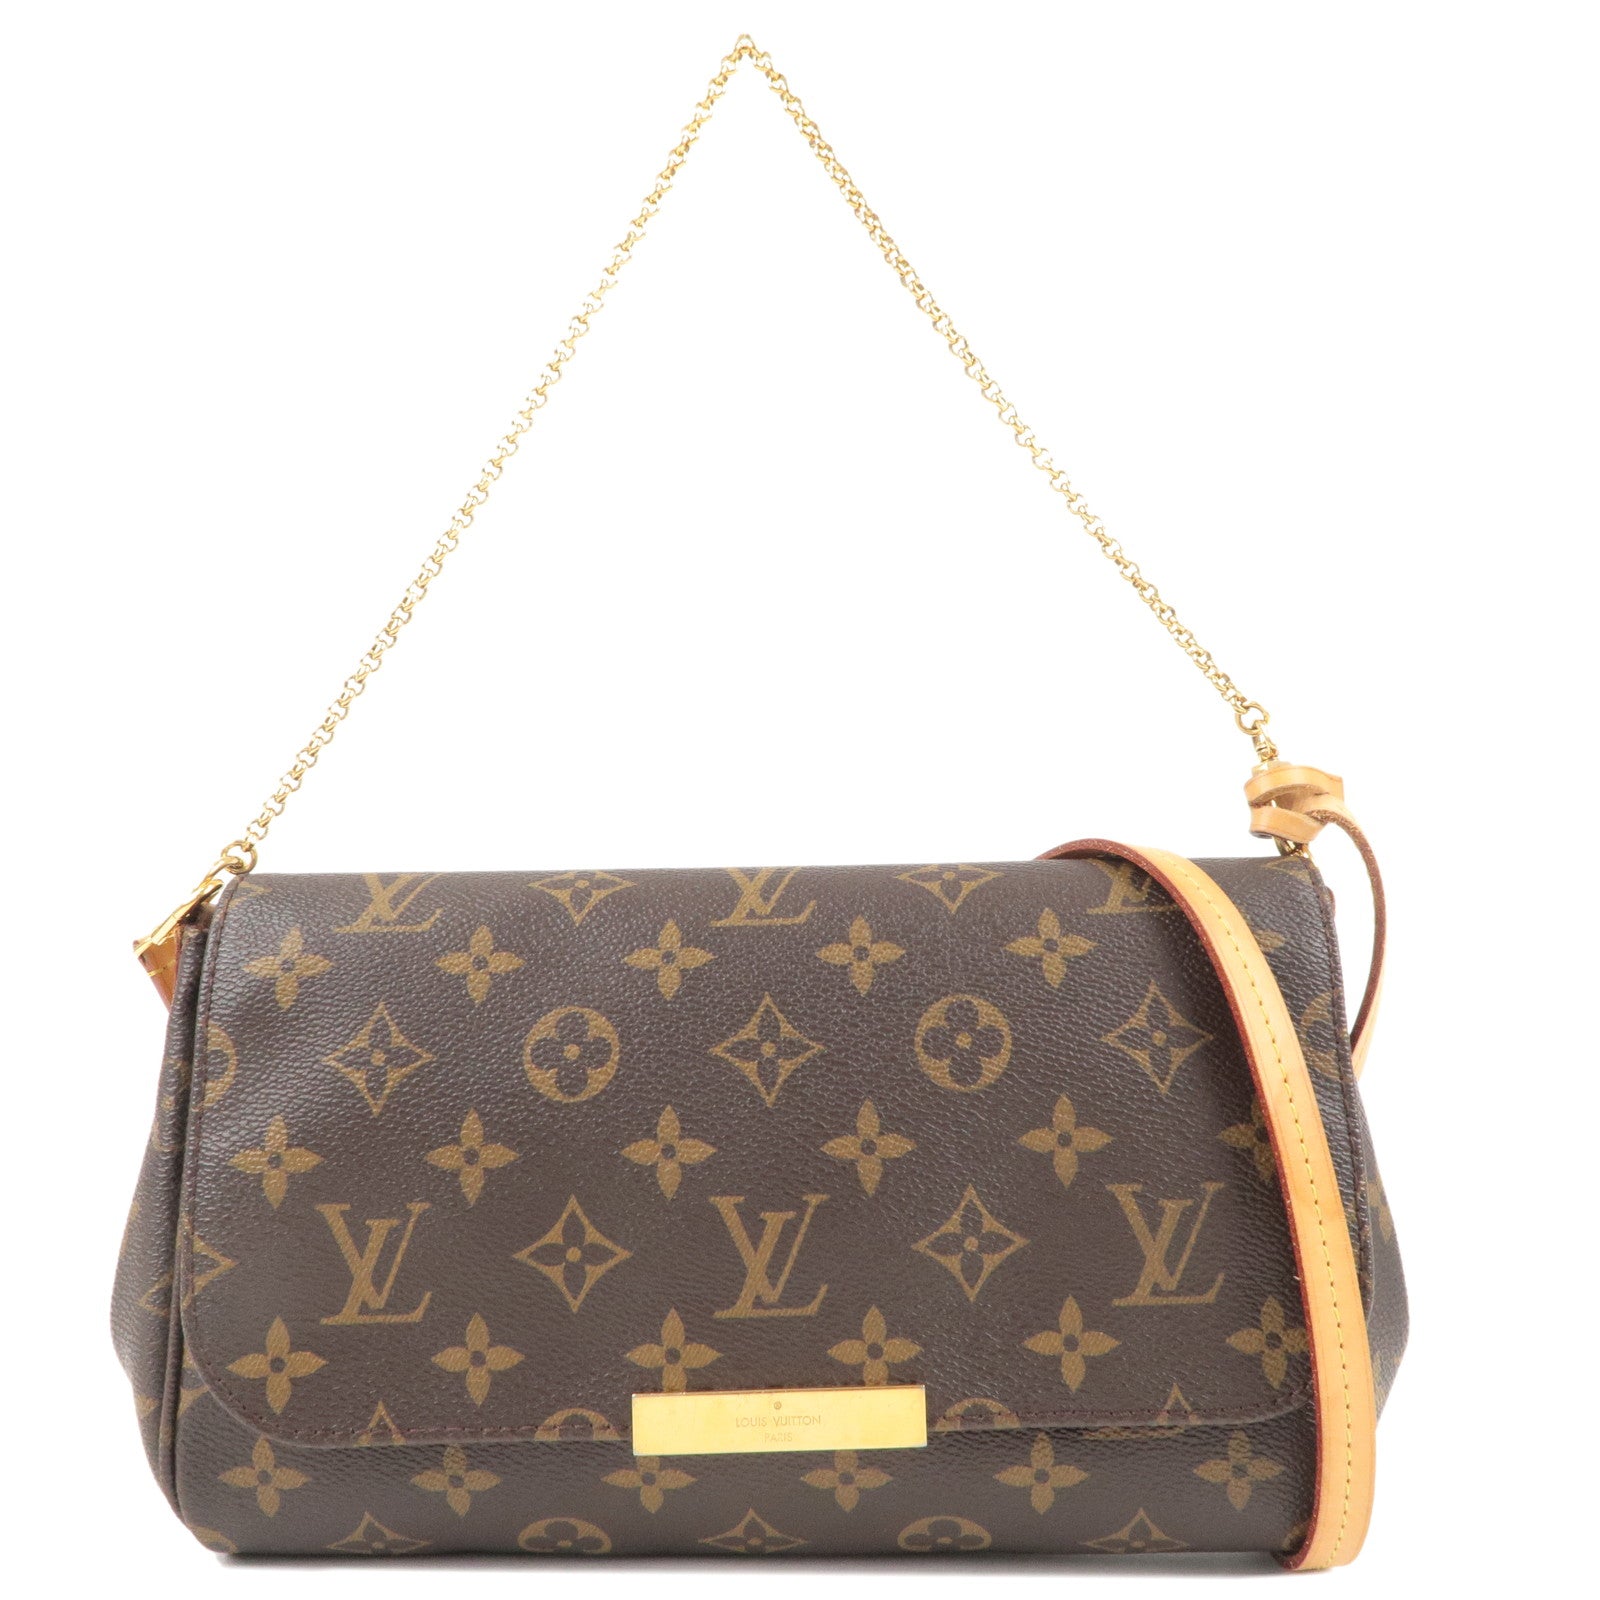 Louis Vuitton Favorite Mm Cross body bag